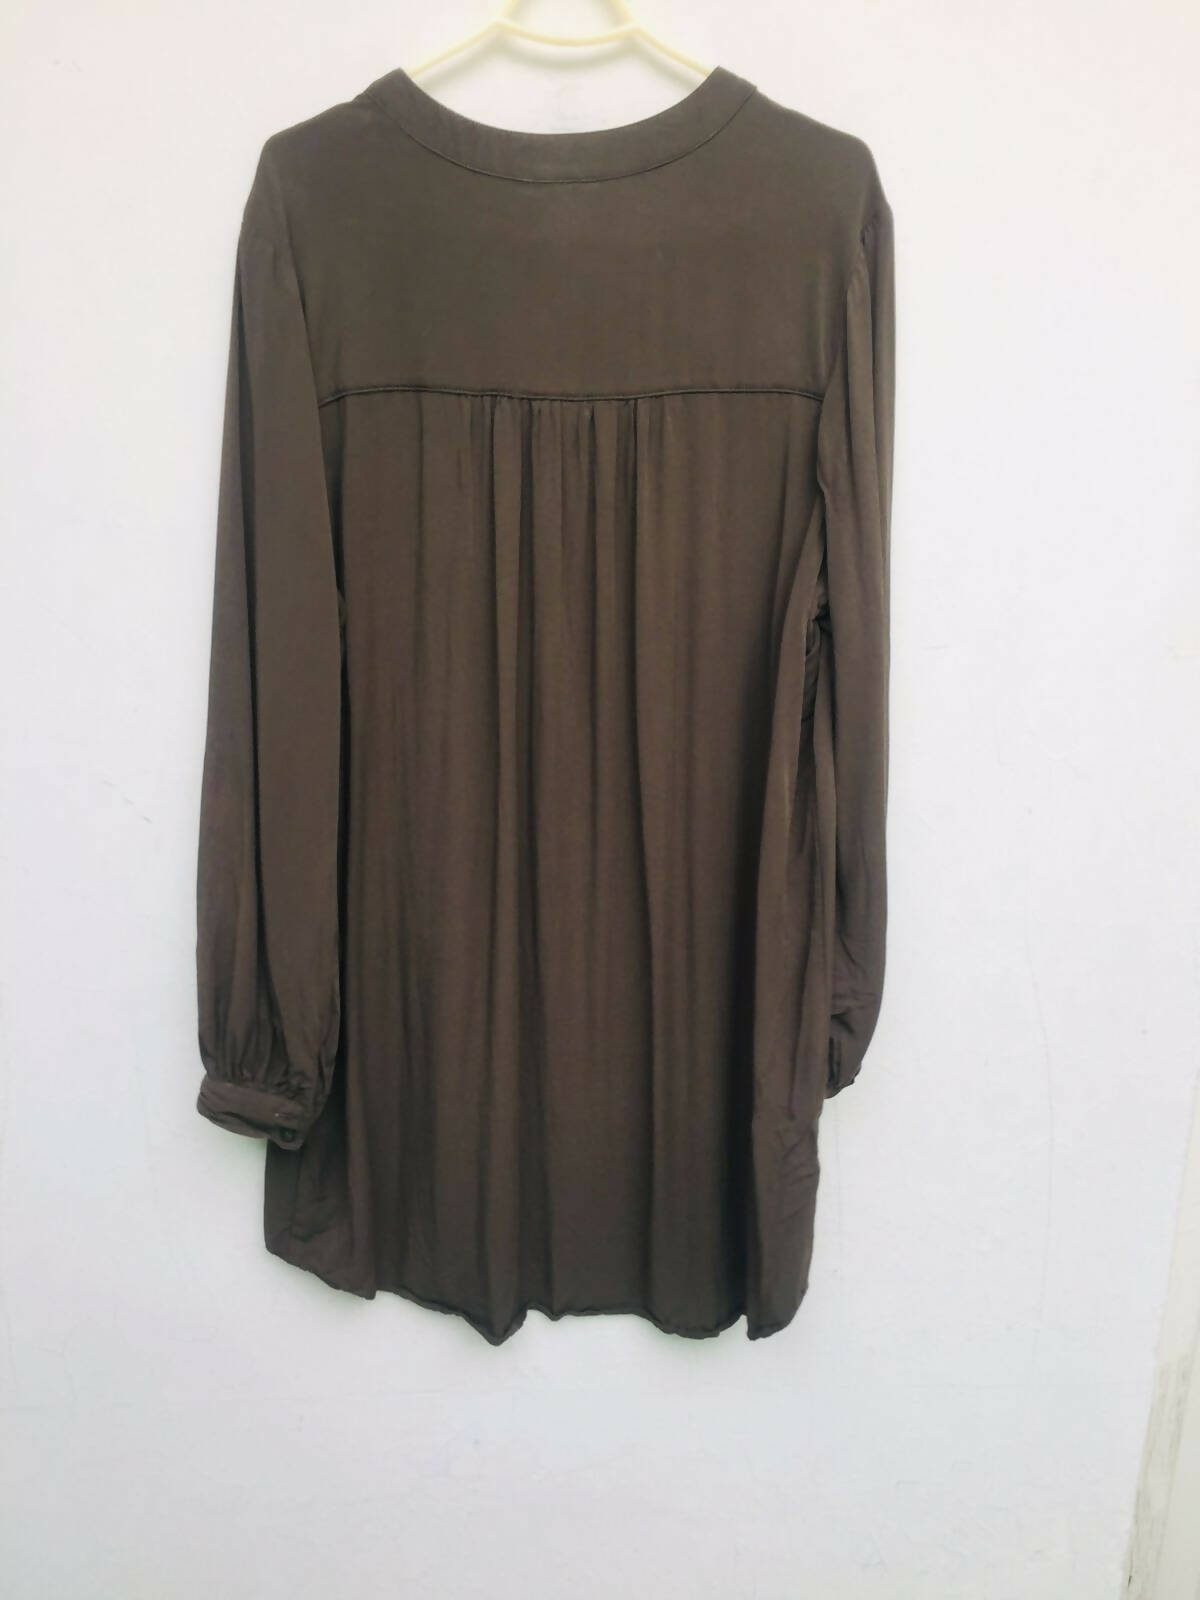 H&M | Black Shirt (Size: XS ) | Women Tops & Shirts | Worn Once